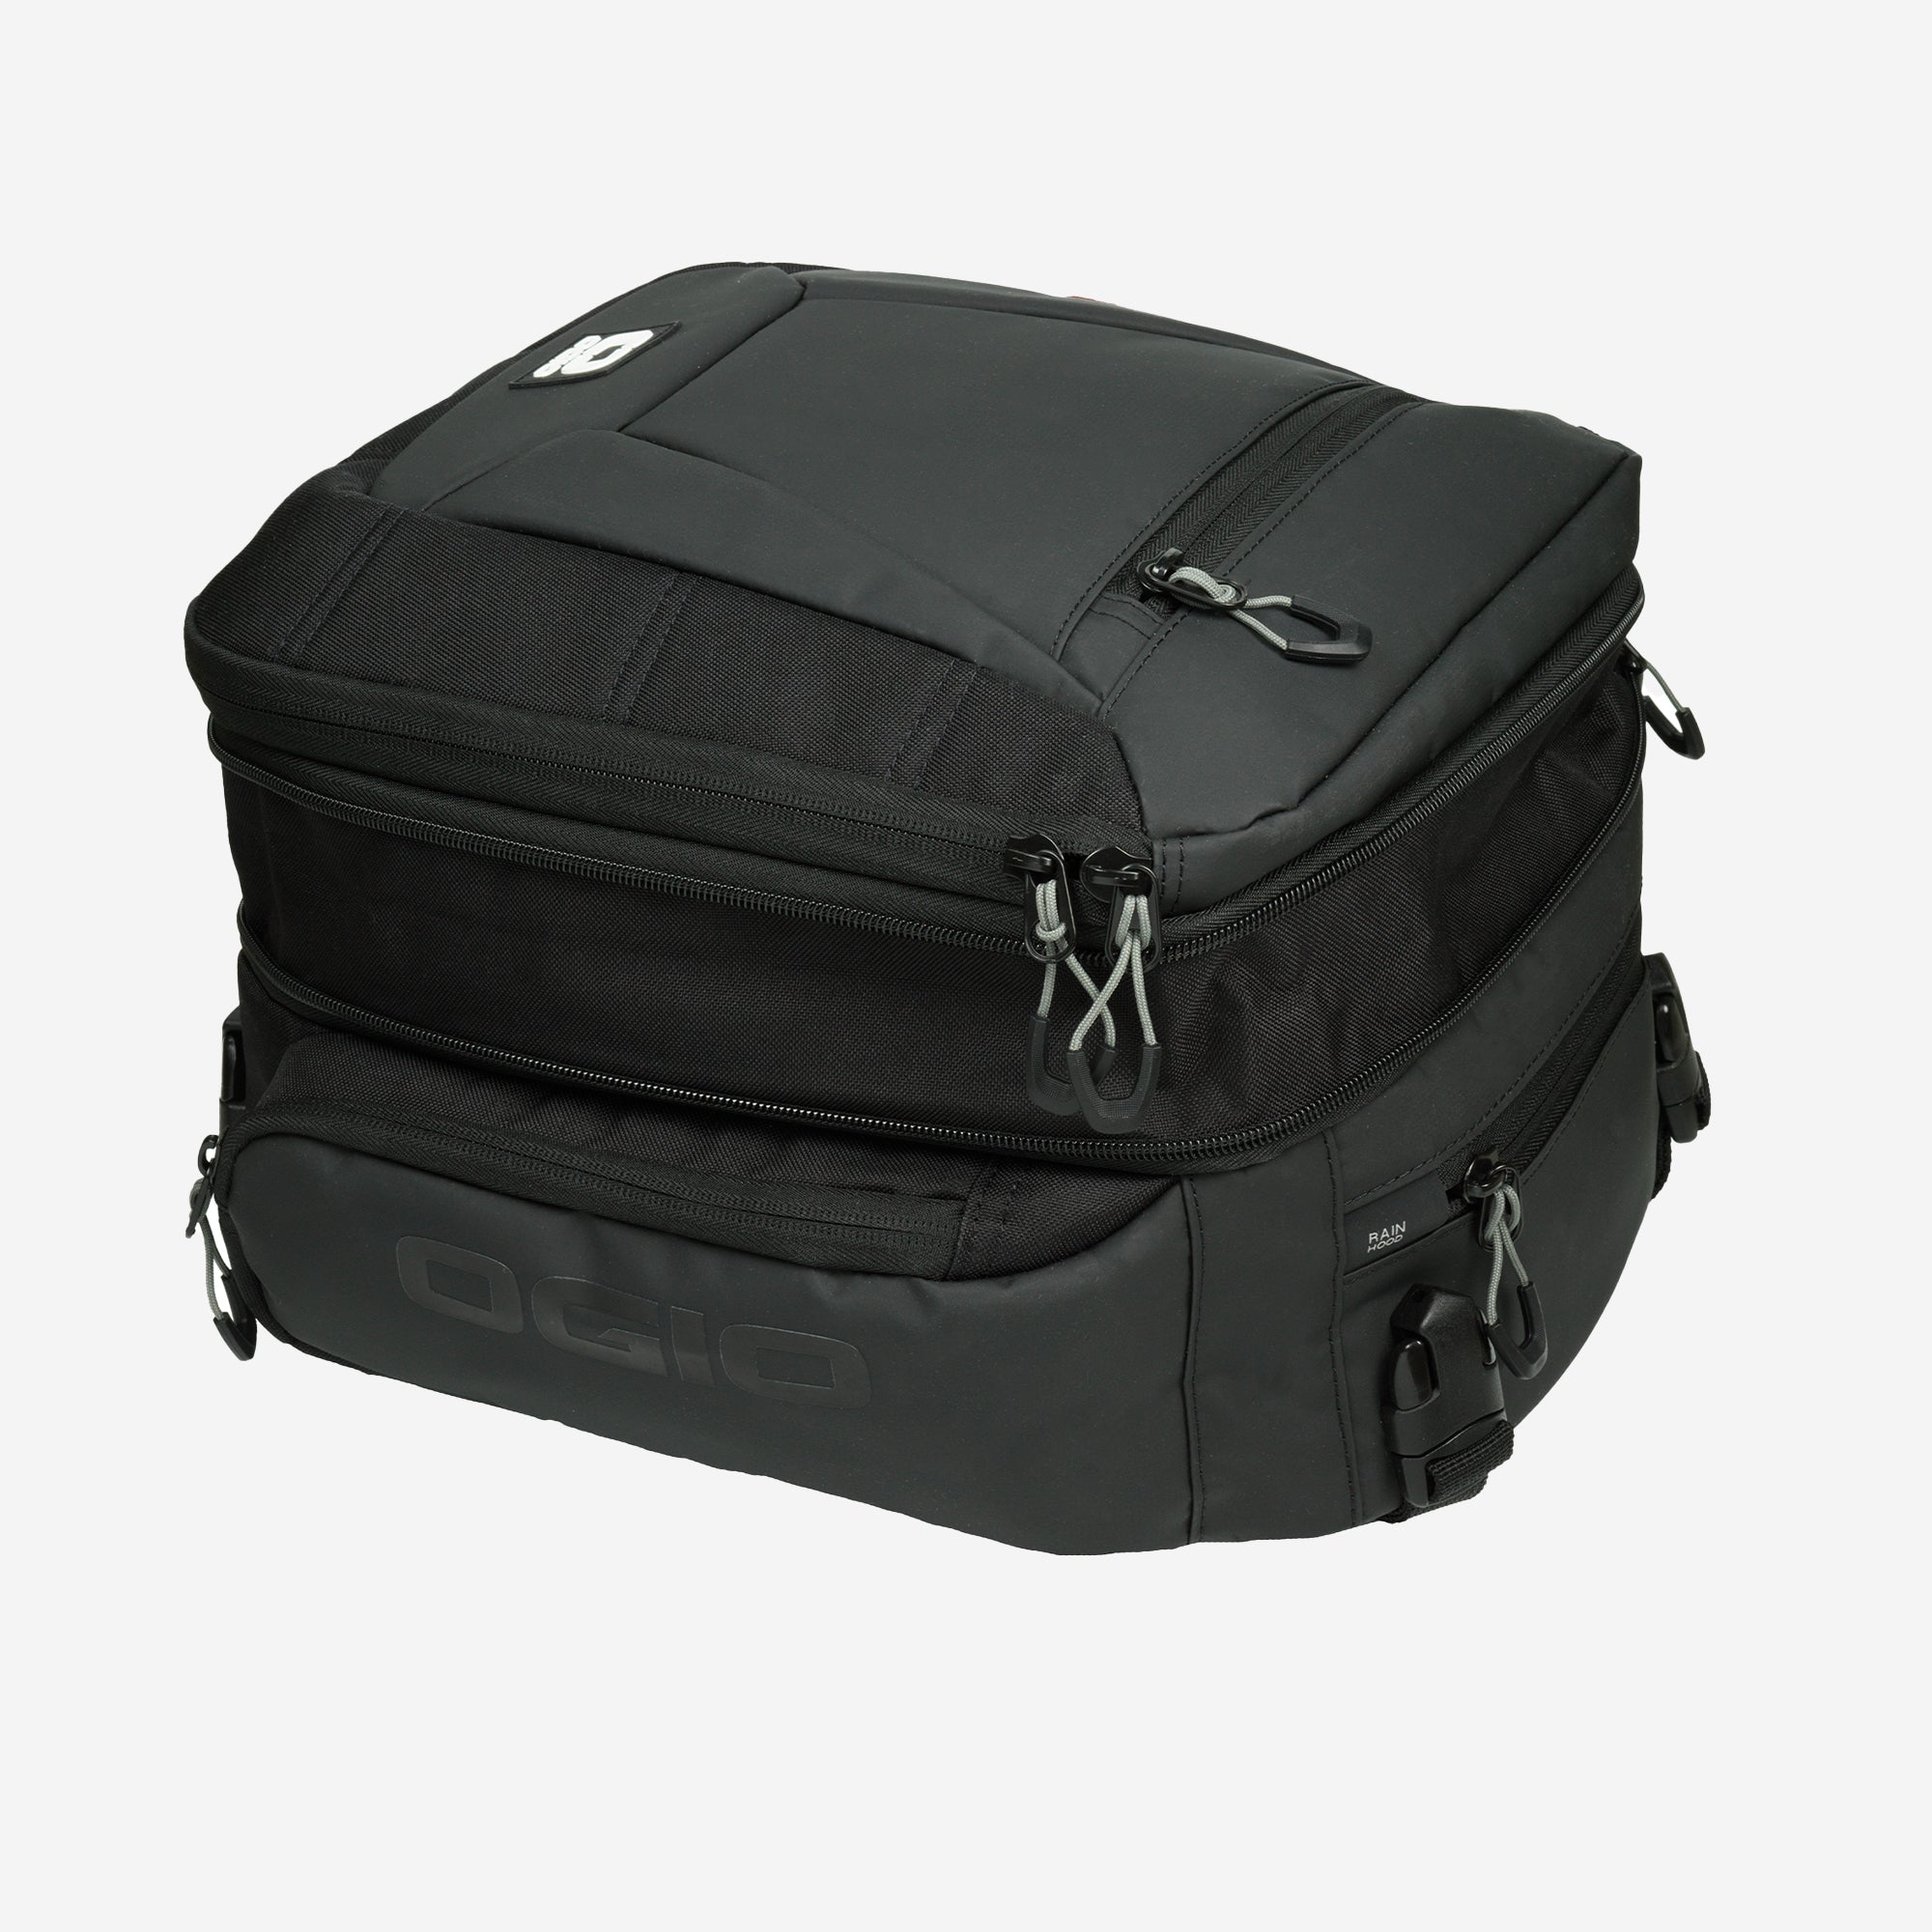 TAIL BAG 2.0: Buy Premium Tail Bag for Bike Online